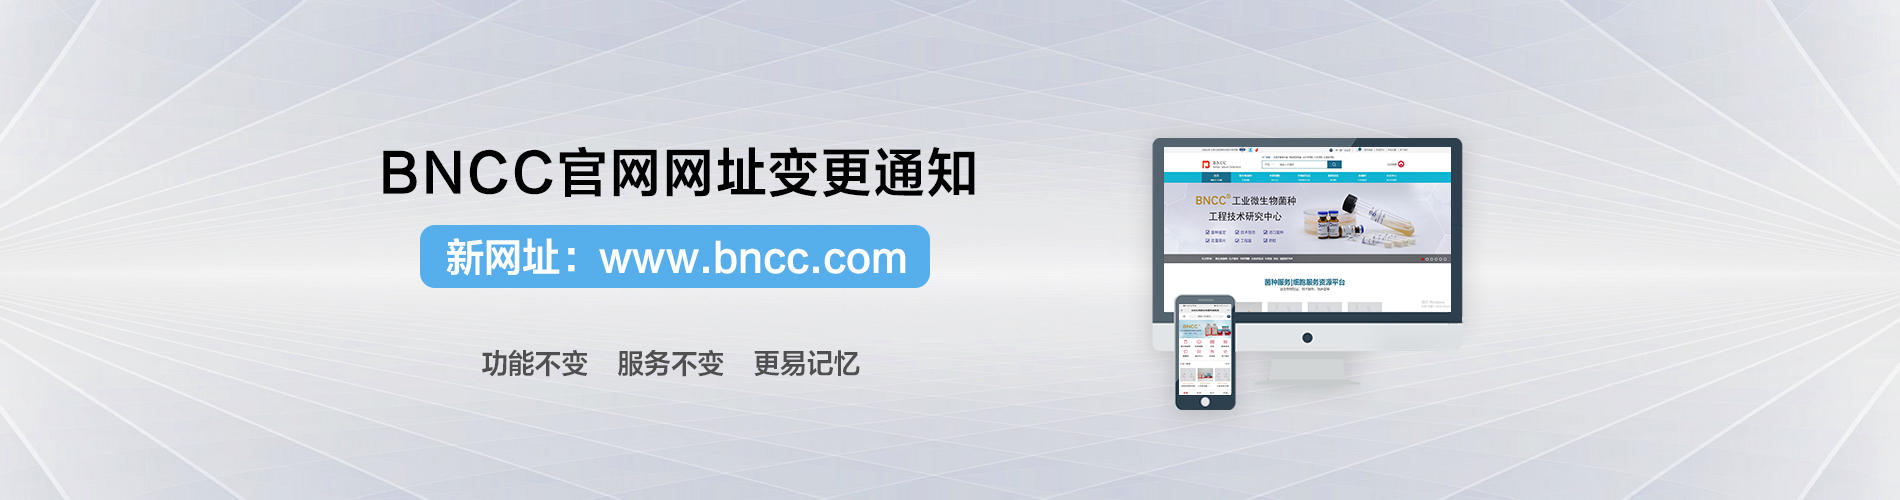 BNCC官网变更